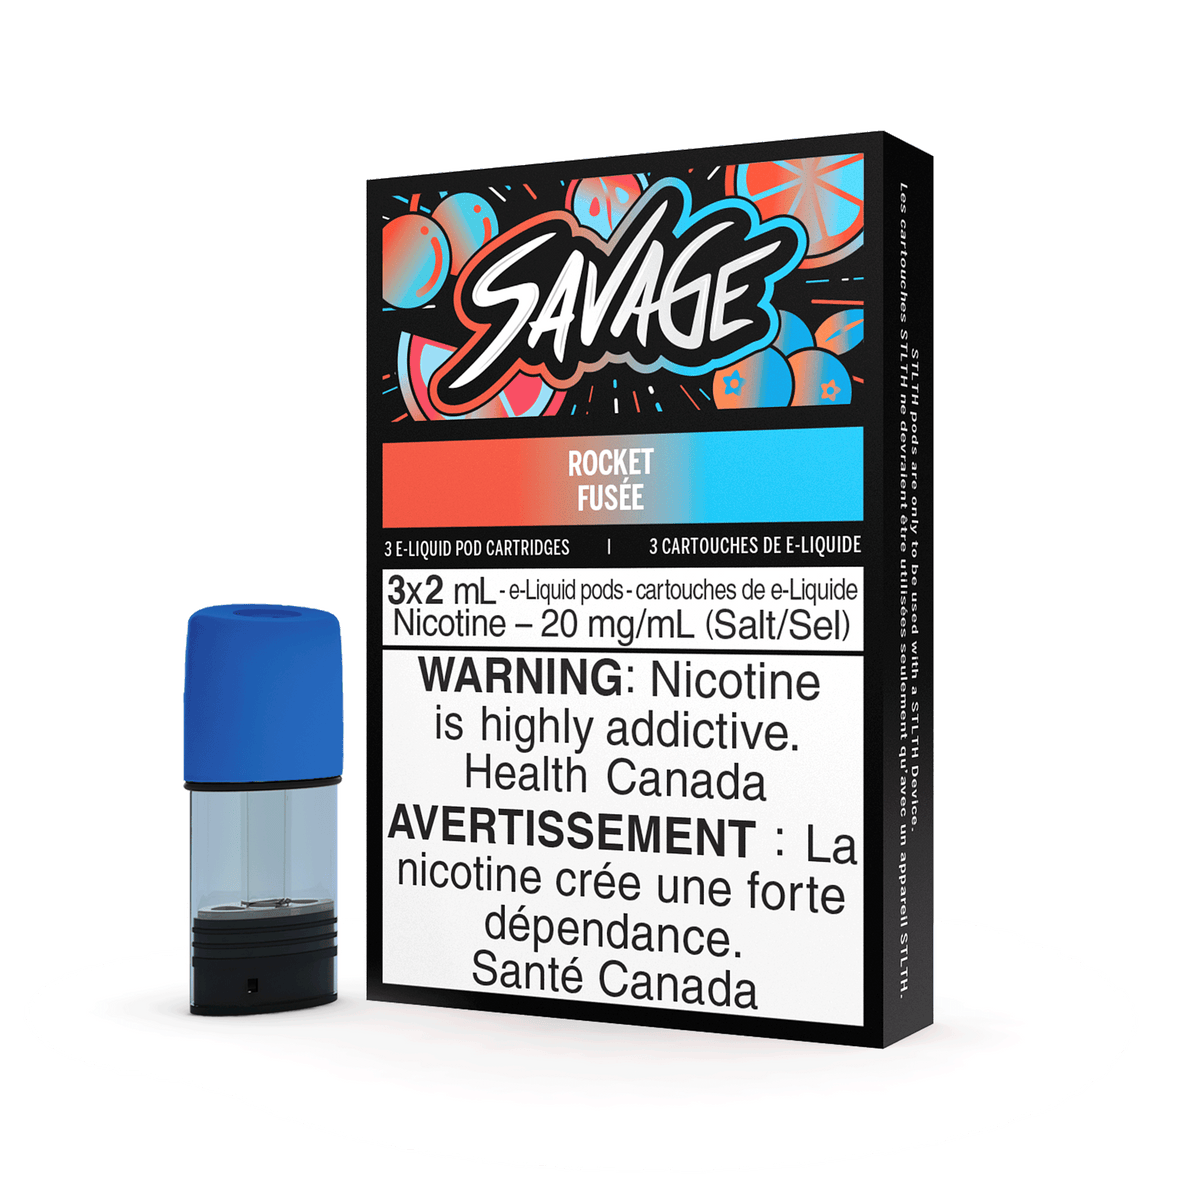 STLTH Savage Vape Pod - Rocket available on Canada online vape shop